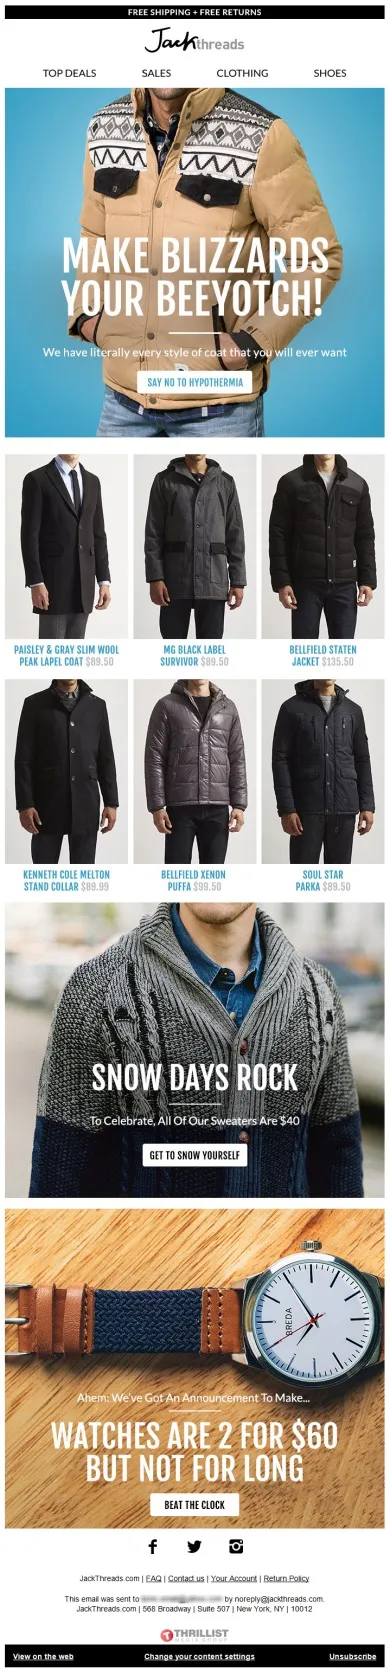 jackthreads fashion ecommerce email marketing examples